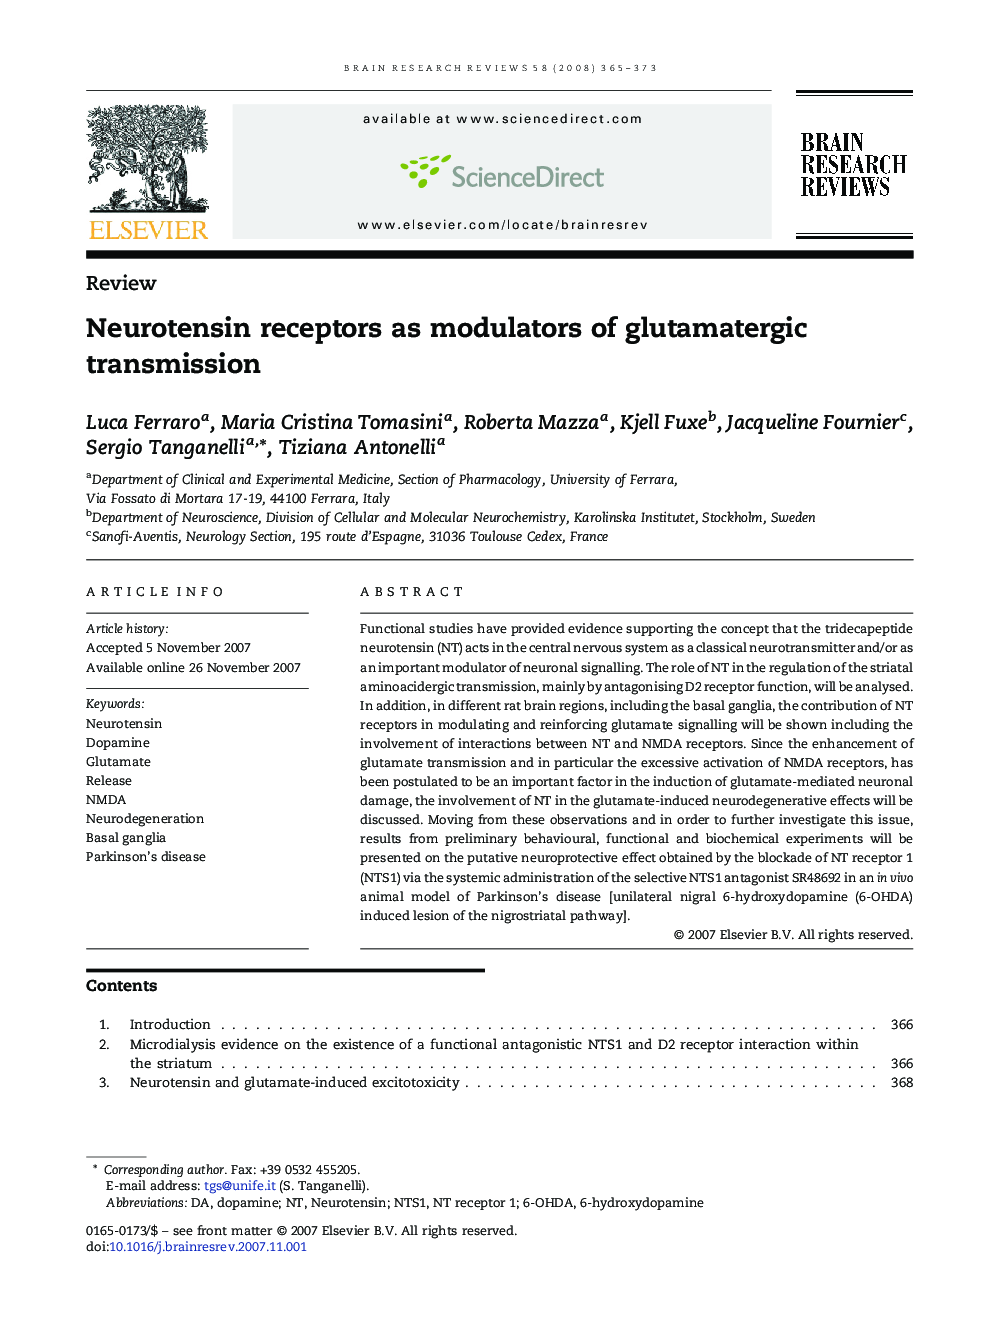 Neurotensin receptors as modulators of glutamatergic transmission